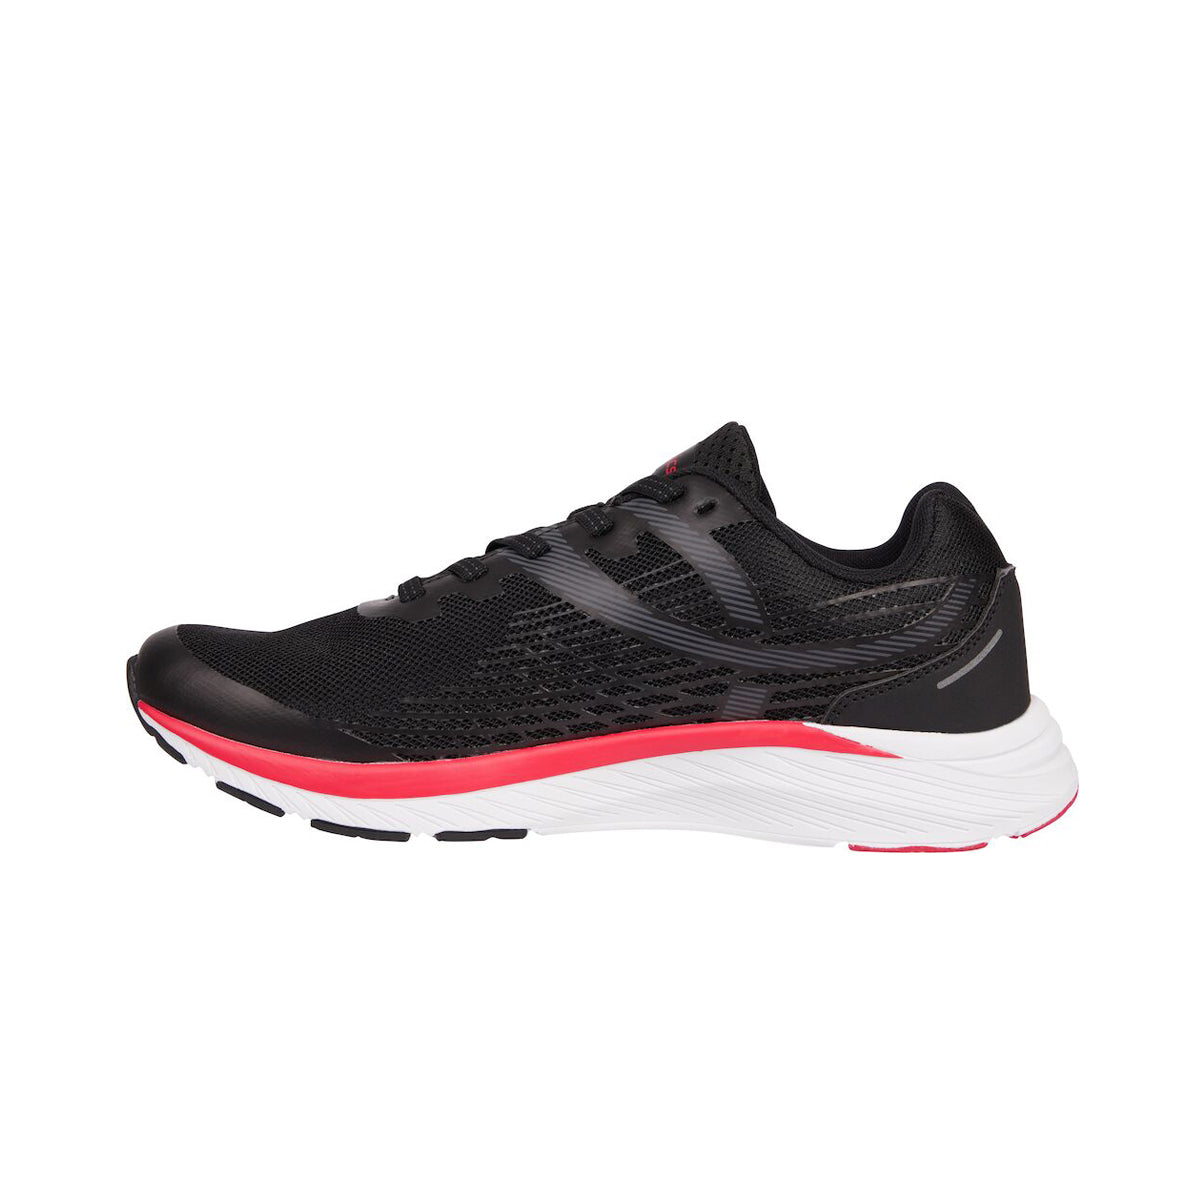 Energetics Elexir M Running Shoes For Men, Black & Red